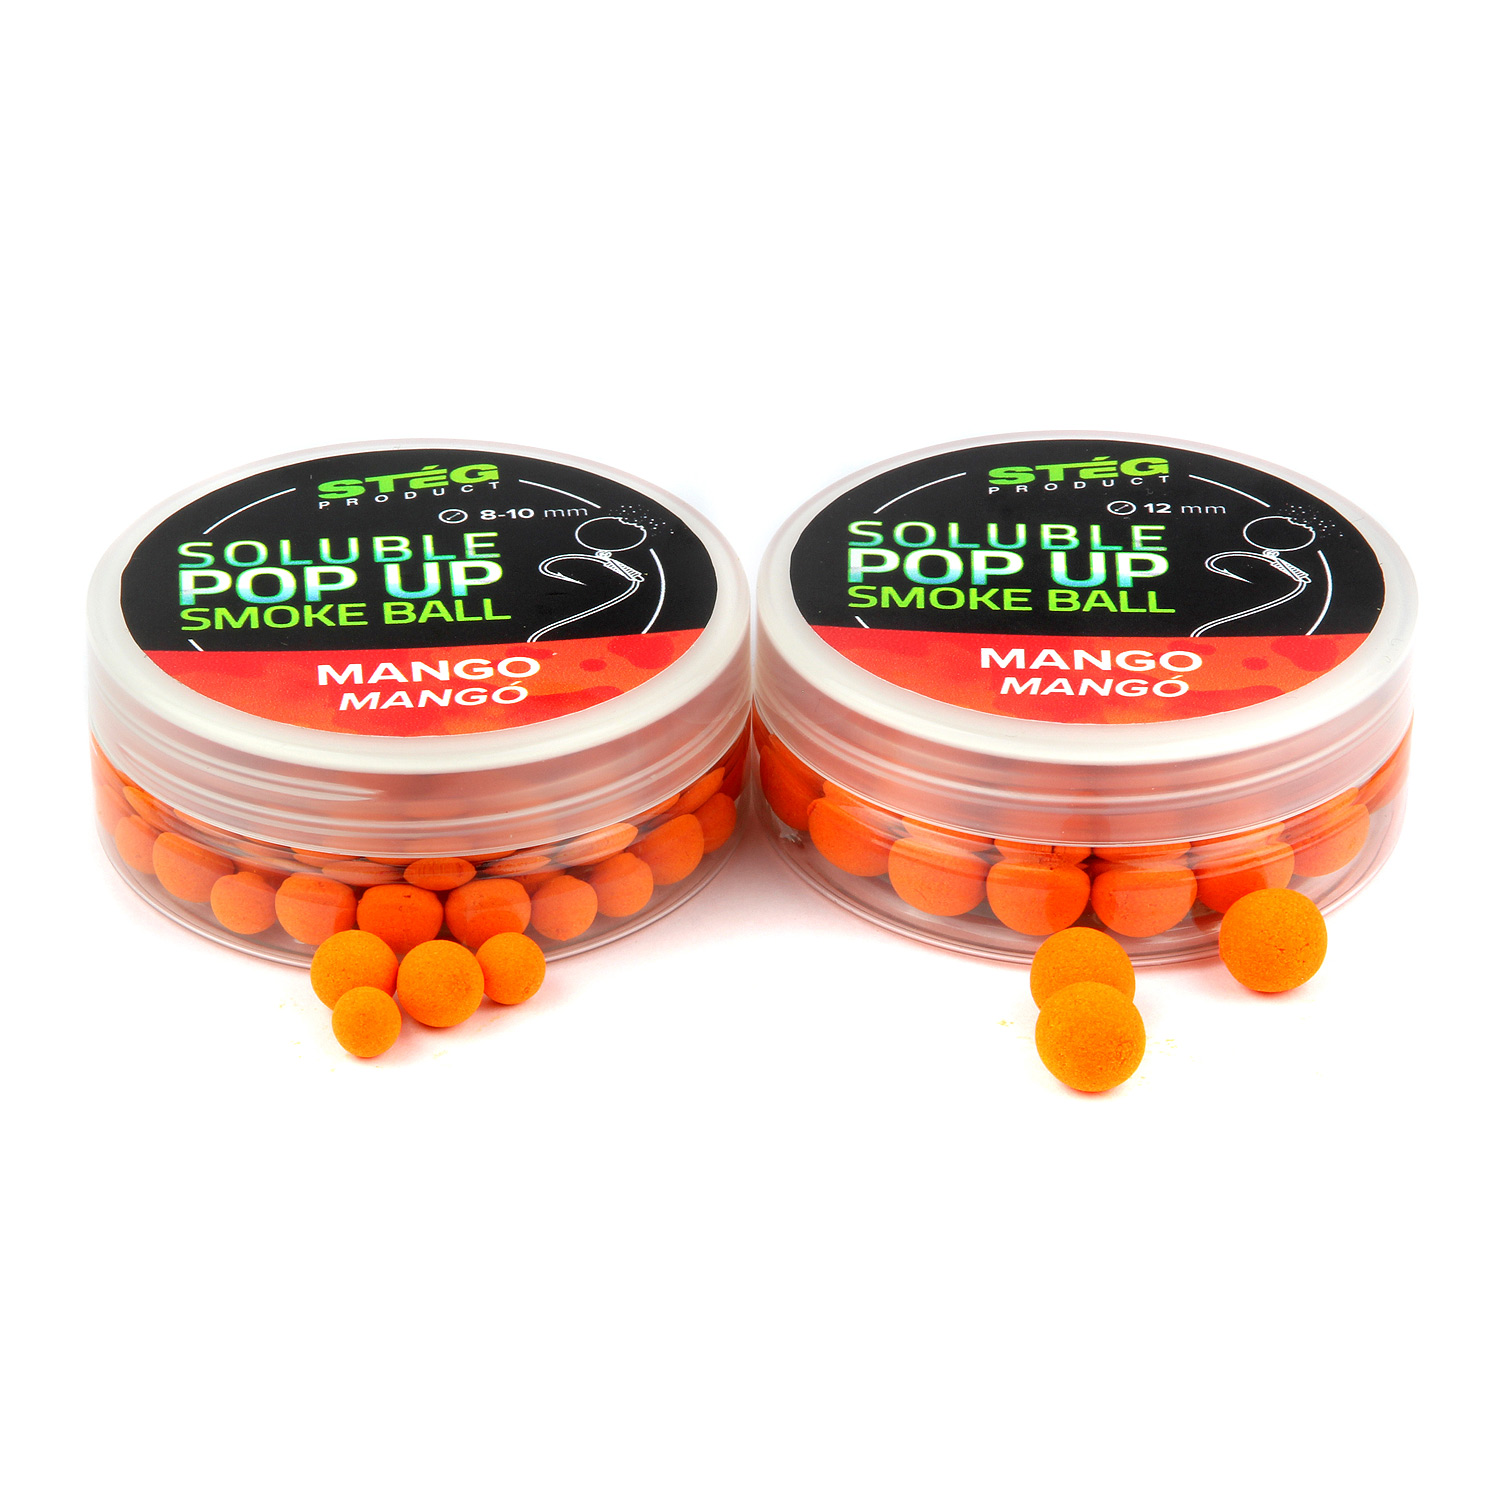 Stg Product Soluble Pop Up Smoke Ball 8-10mm Mango 20g